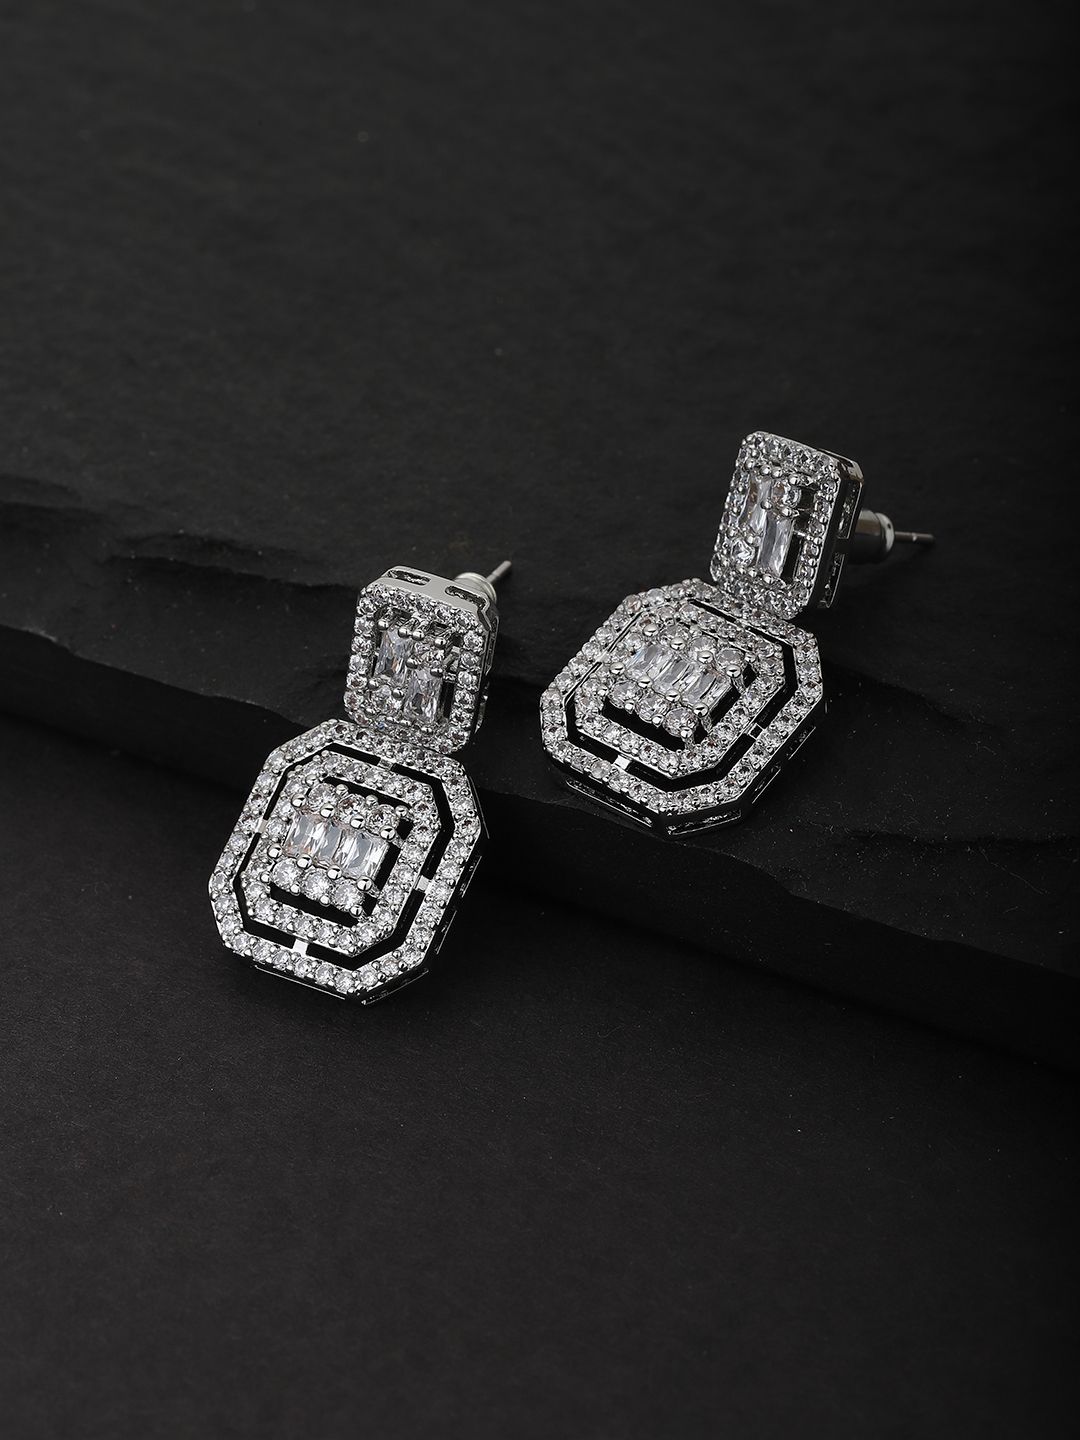 Carlton London Silver-Toned Rhodium-Plated Geometric Drop Earrings Price in India